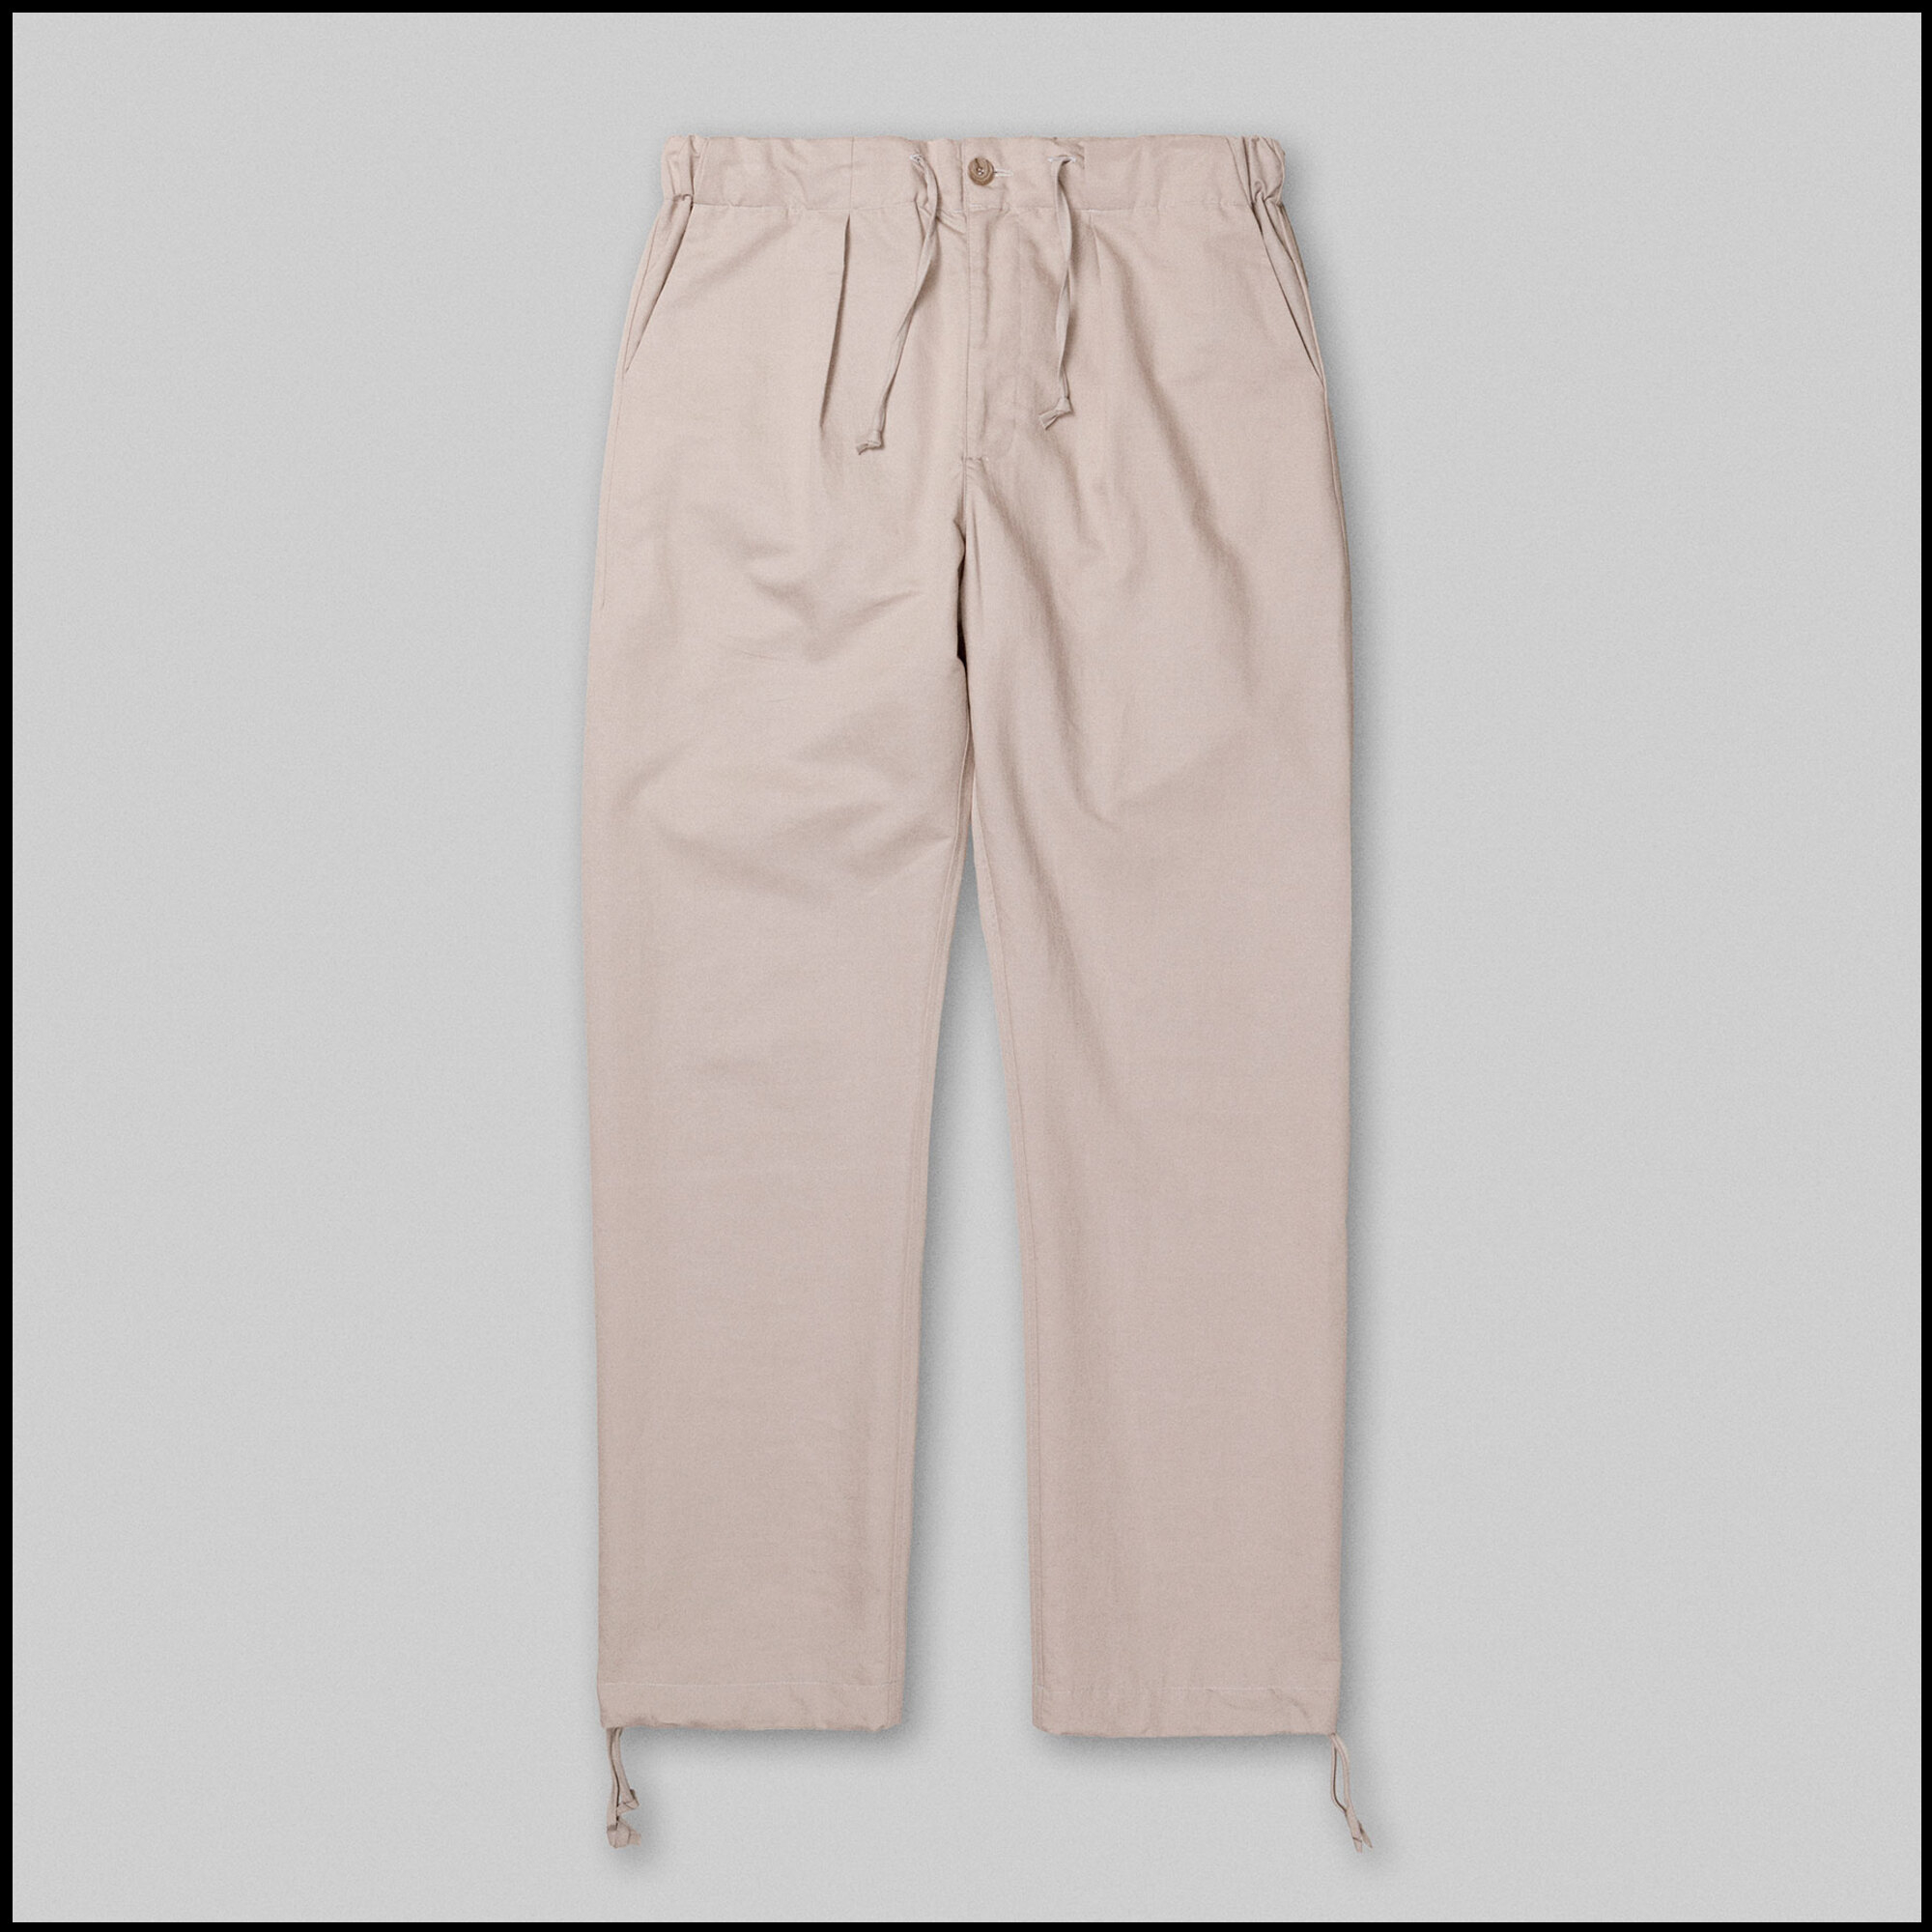 TERRA pants by Arpenteur in Stone taffetas color